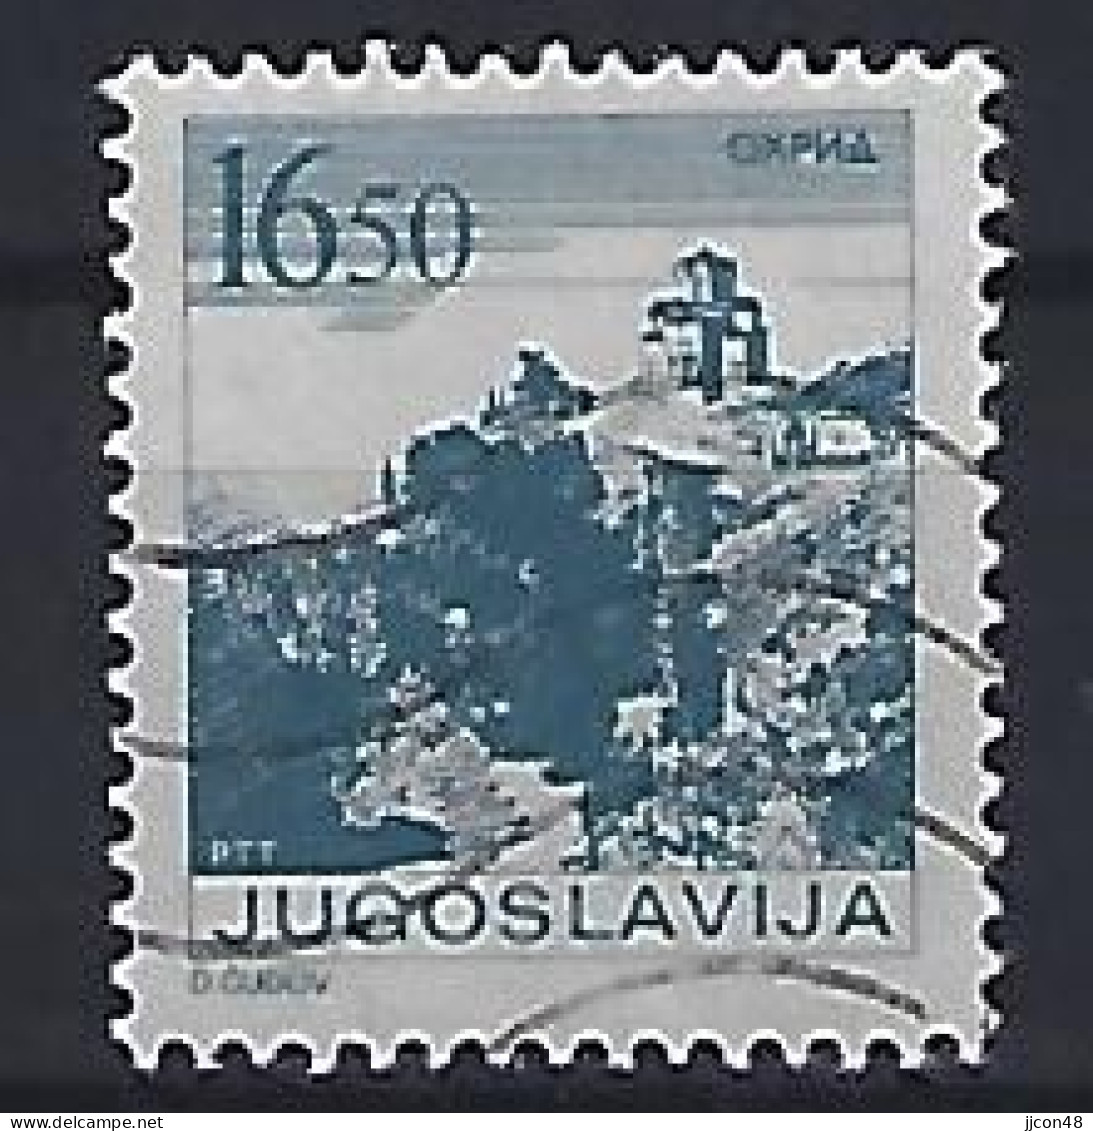 Jugoslavia 1983  Sehenswurdigkeiten (o) Mi.1995 A - Usati